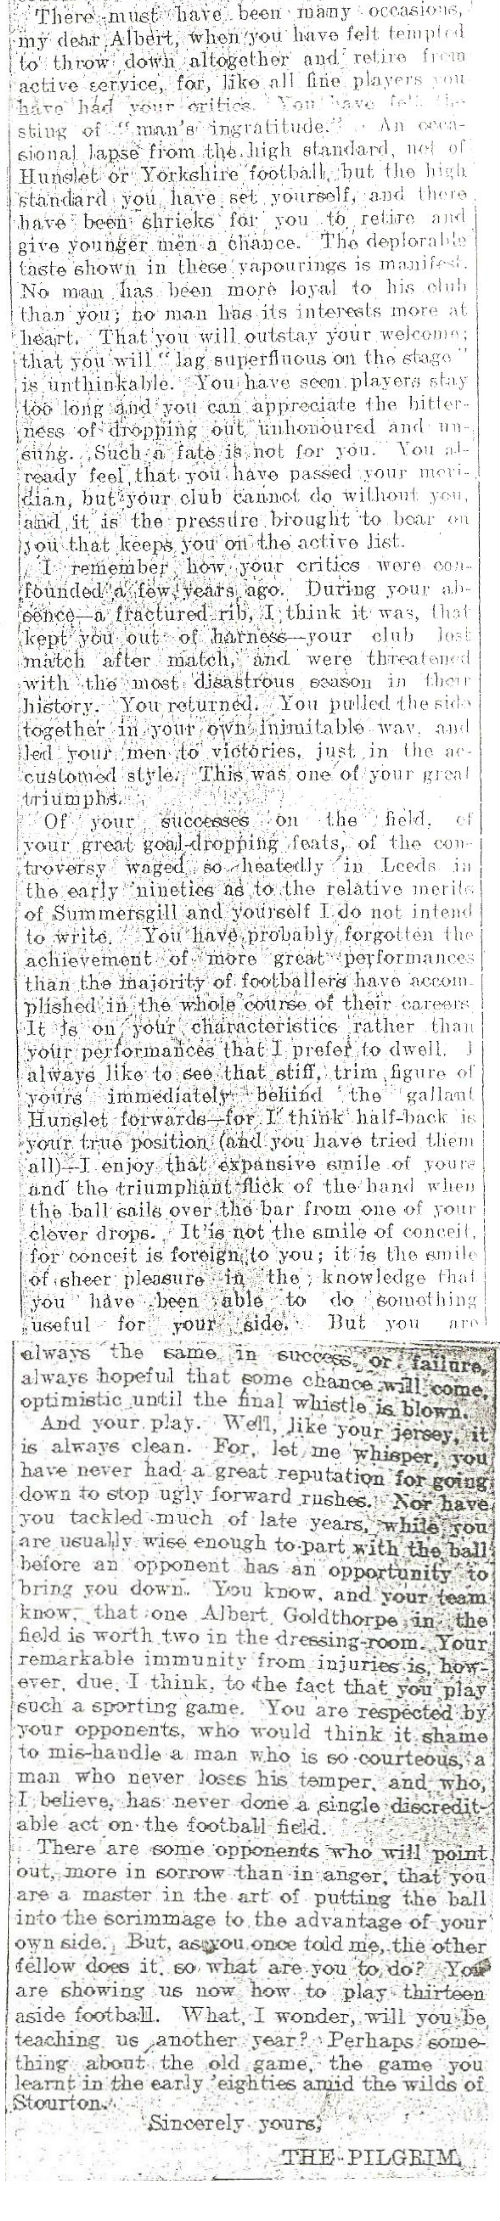 Letter to Albert Goldthorpe